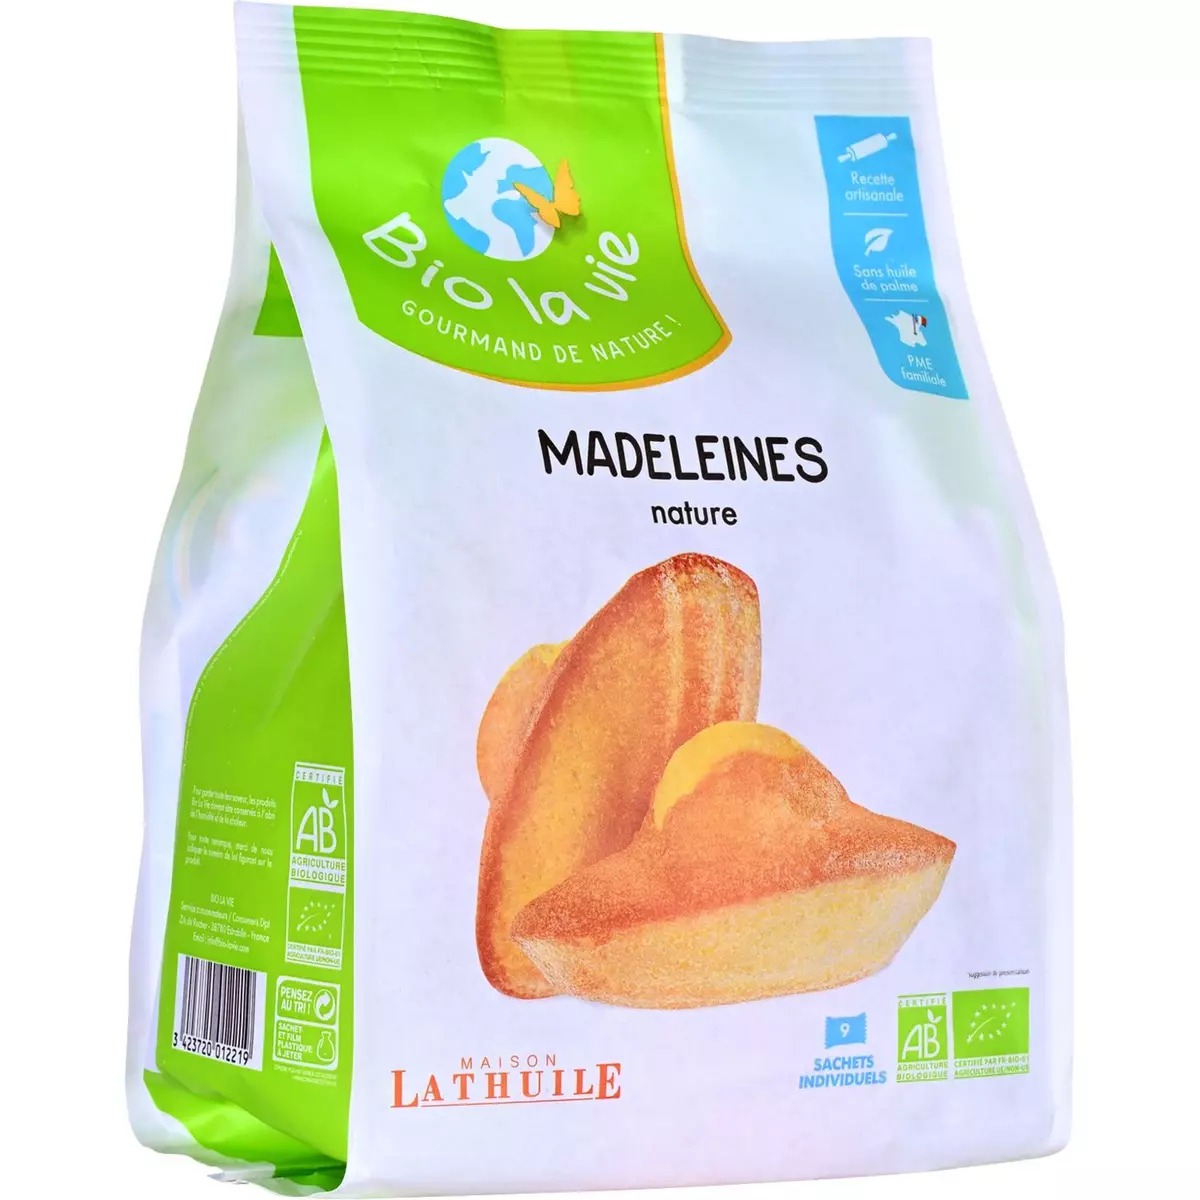 BIO LA VIE Madeleines nature sans huile de palme bio 9 madeleines 200g